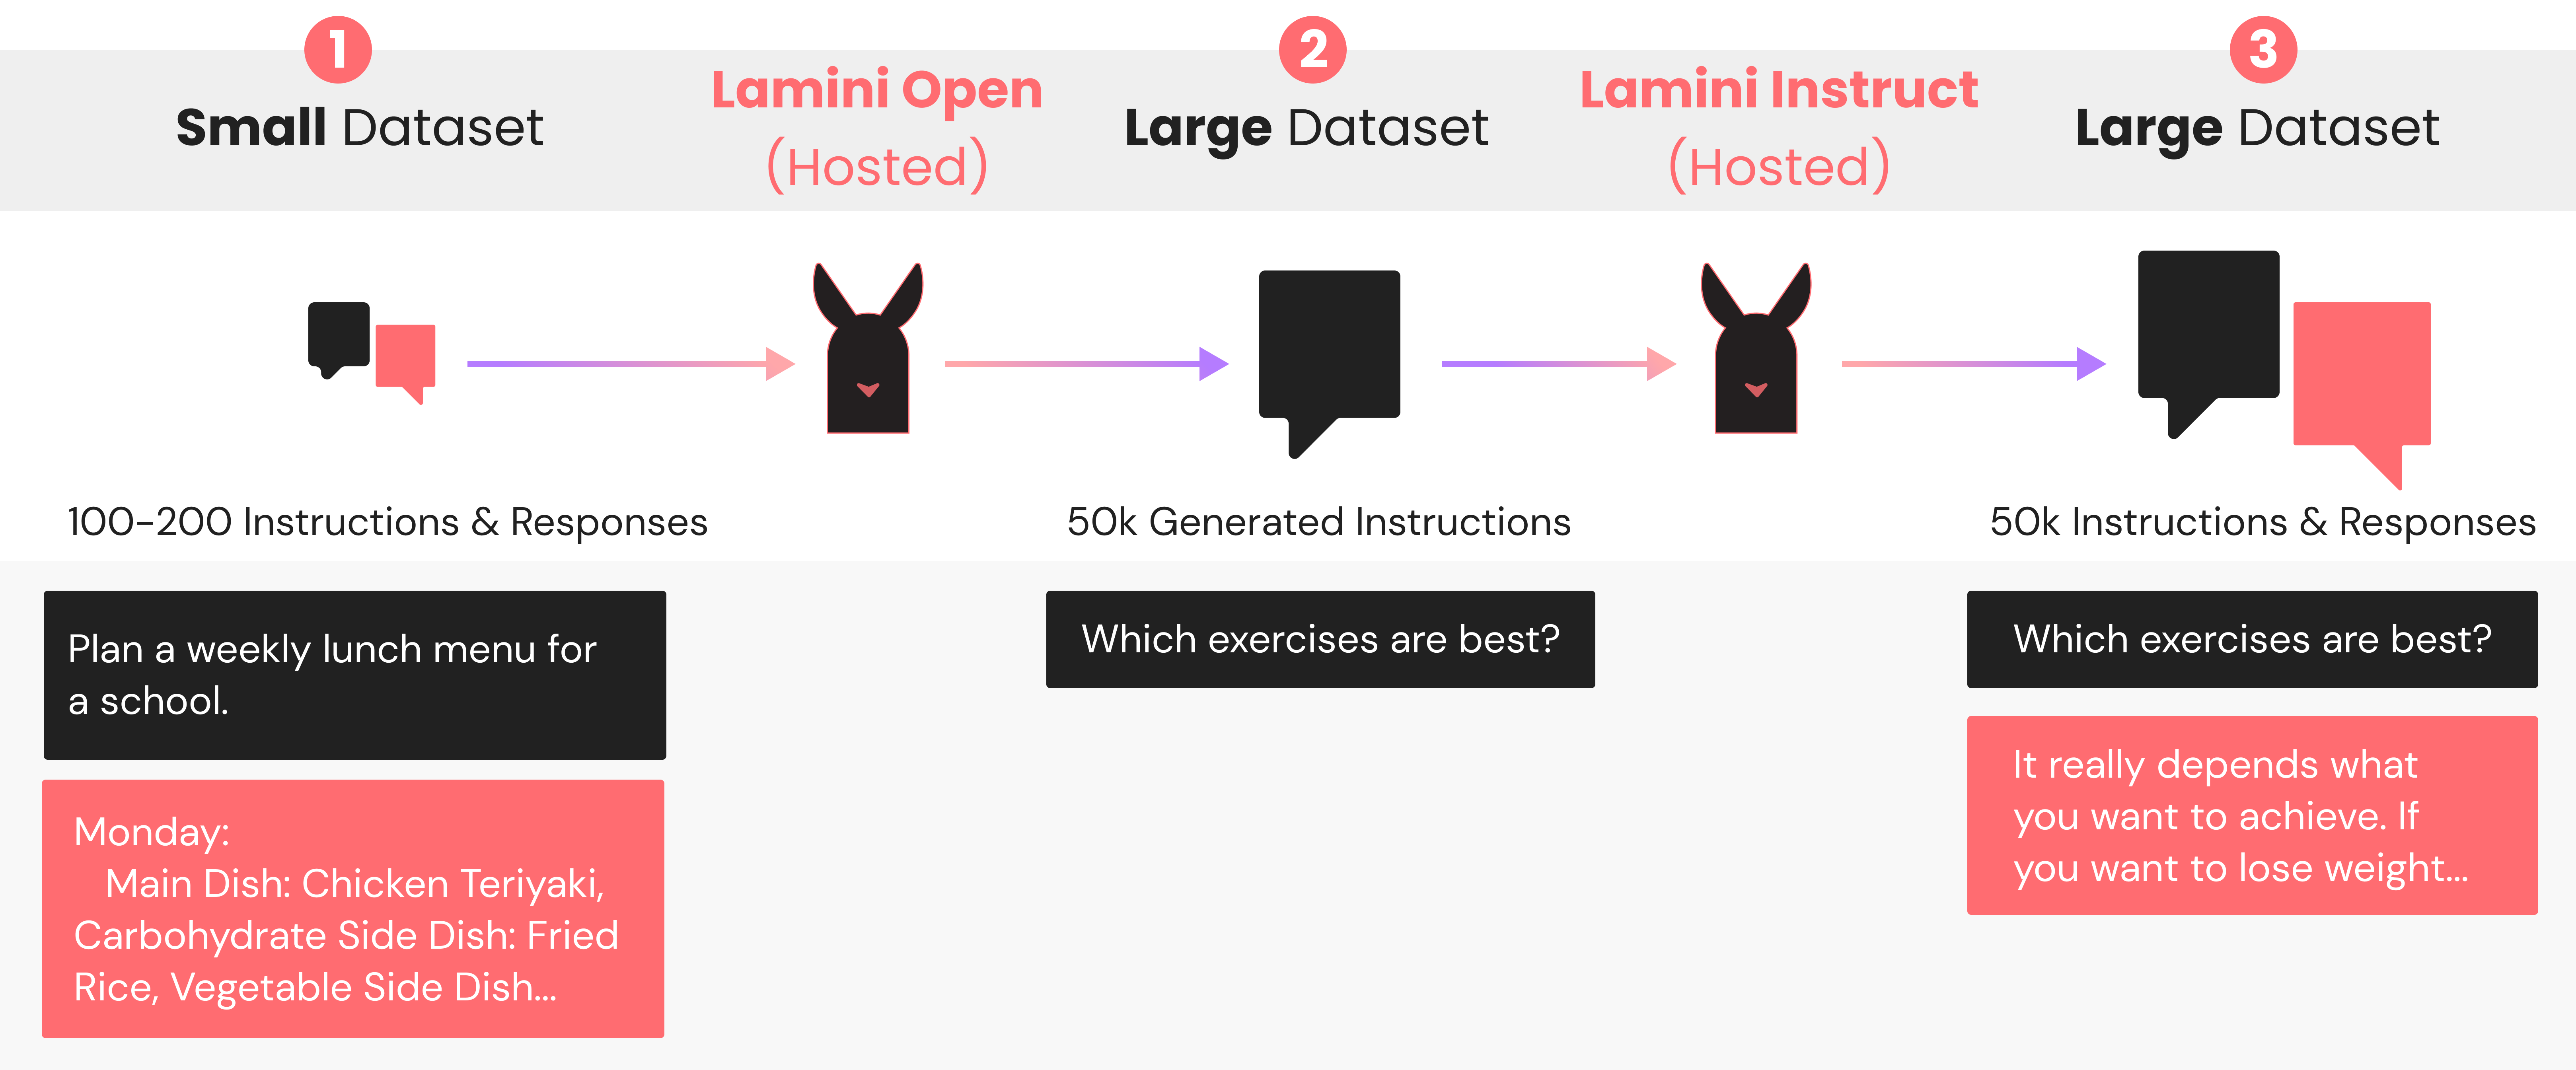 Lamini Process Step by Step